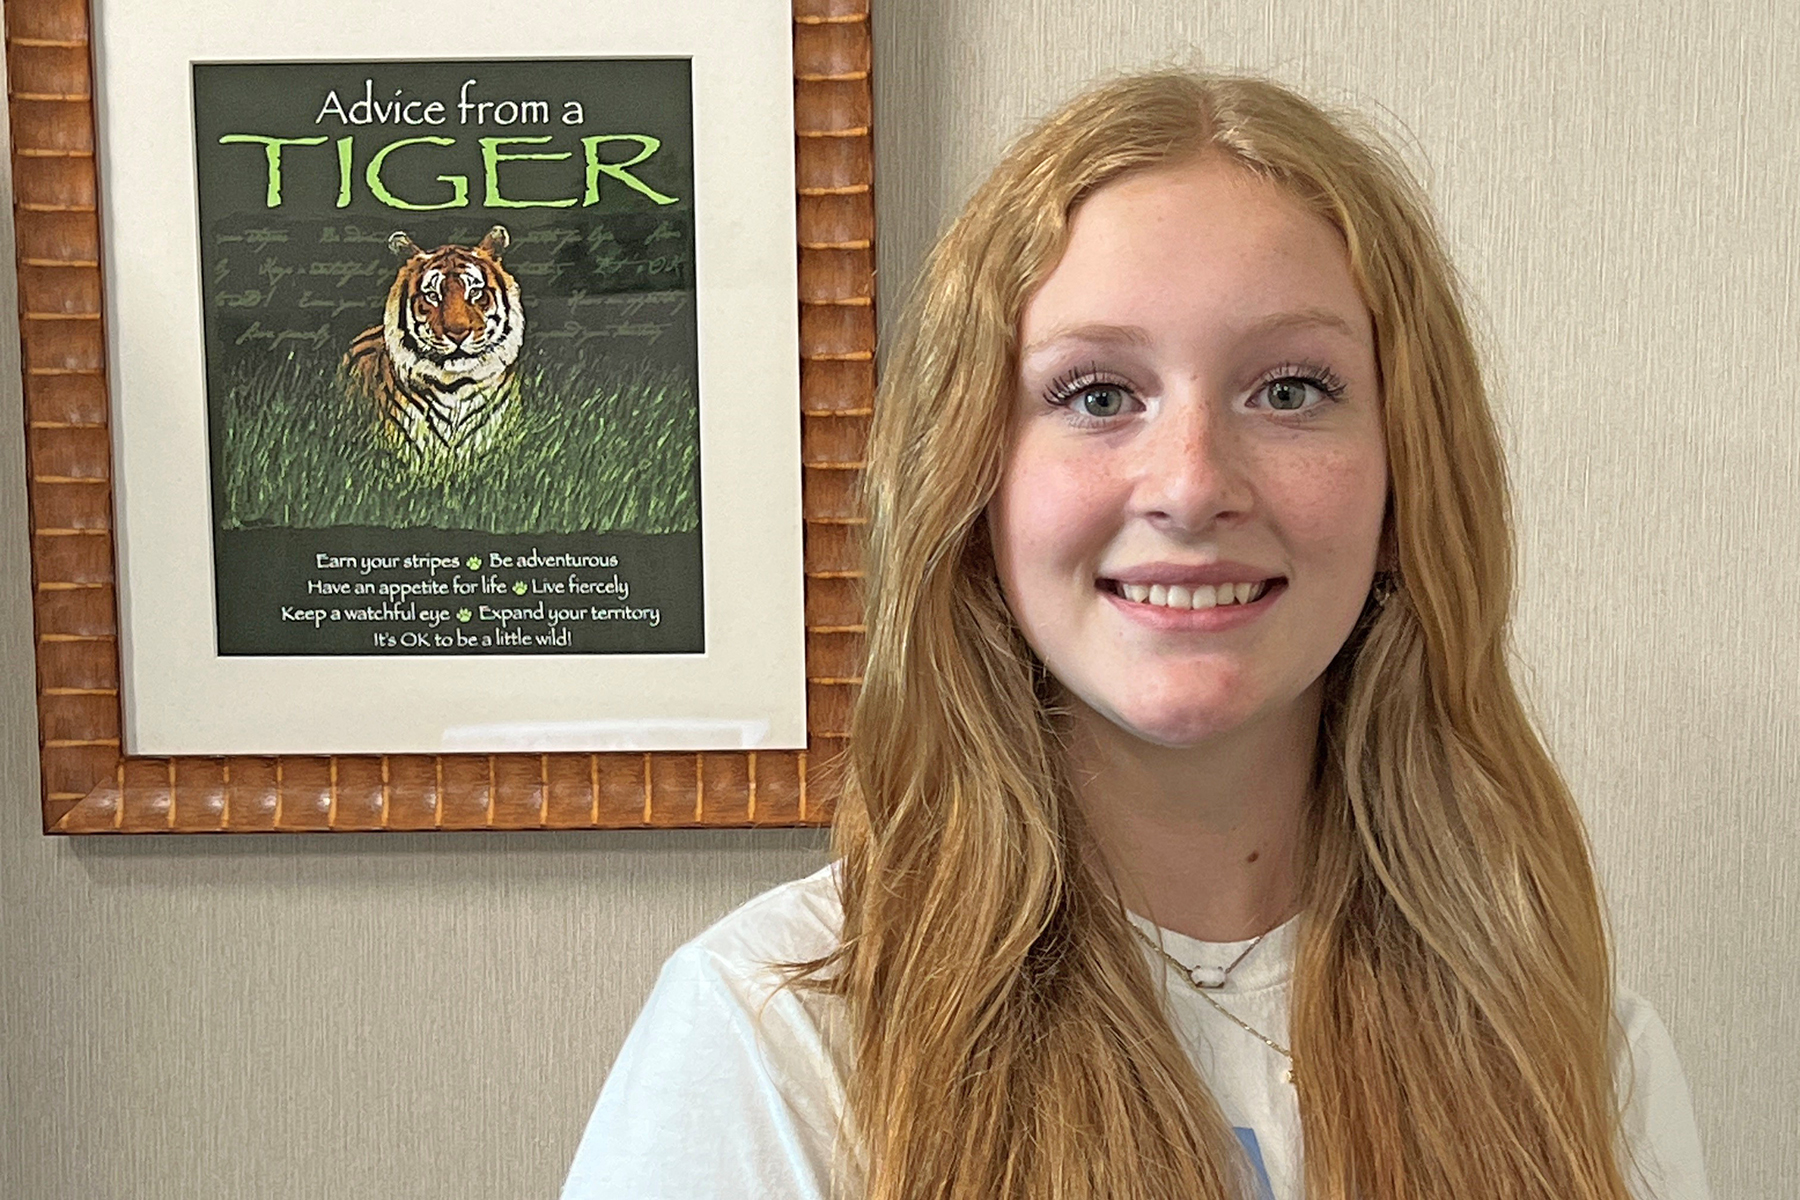 CFISD Student of the Week: Abigail Davenport